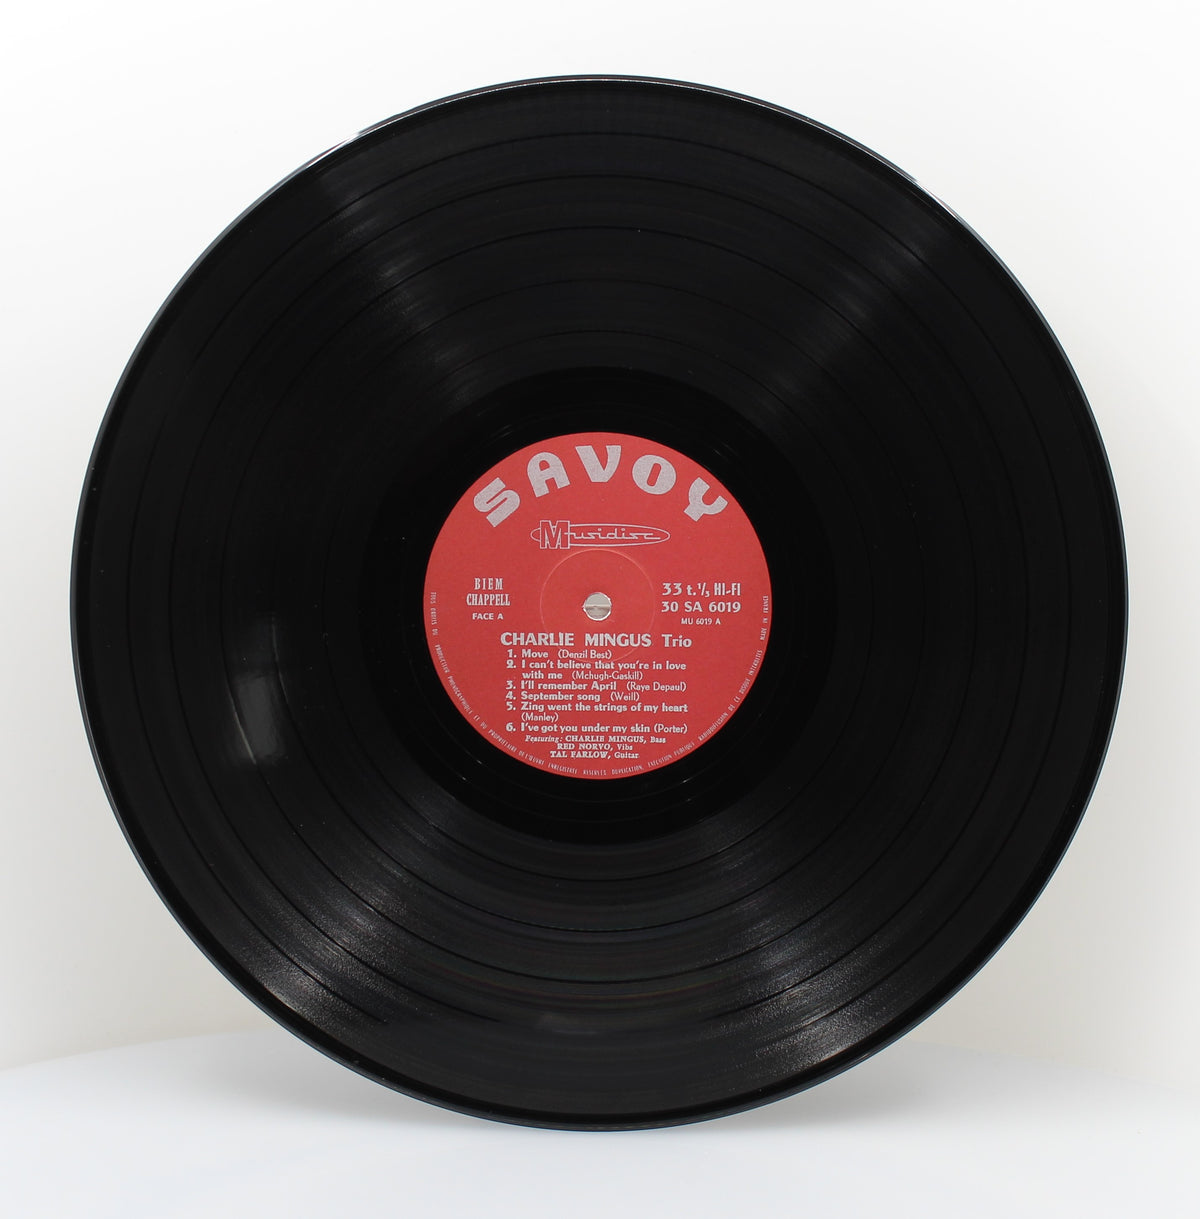 The Charlie Mingus Trio With Tal Farlow, Red Norvo – The Charlie Mingus Trio With Tal Farlow, Red Norvo, Vinyl, LP, Album, Reissue, Jazz, France